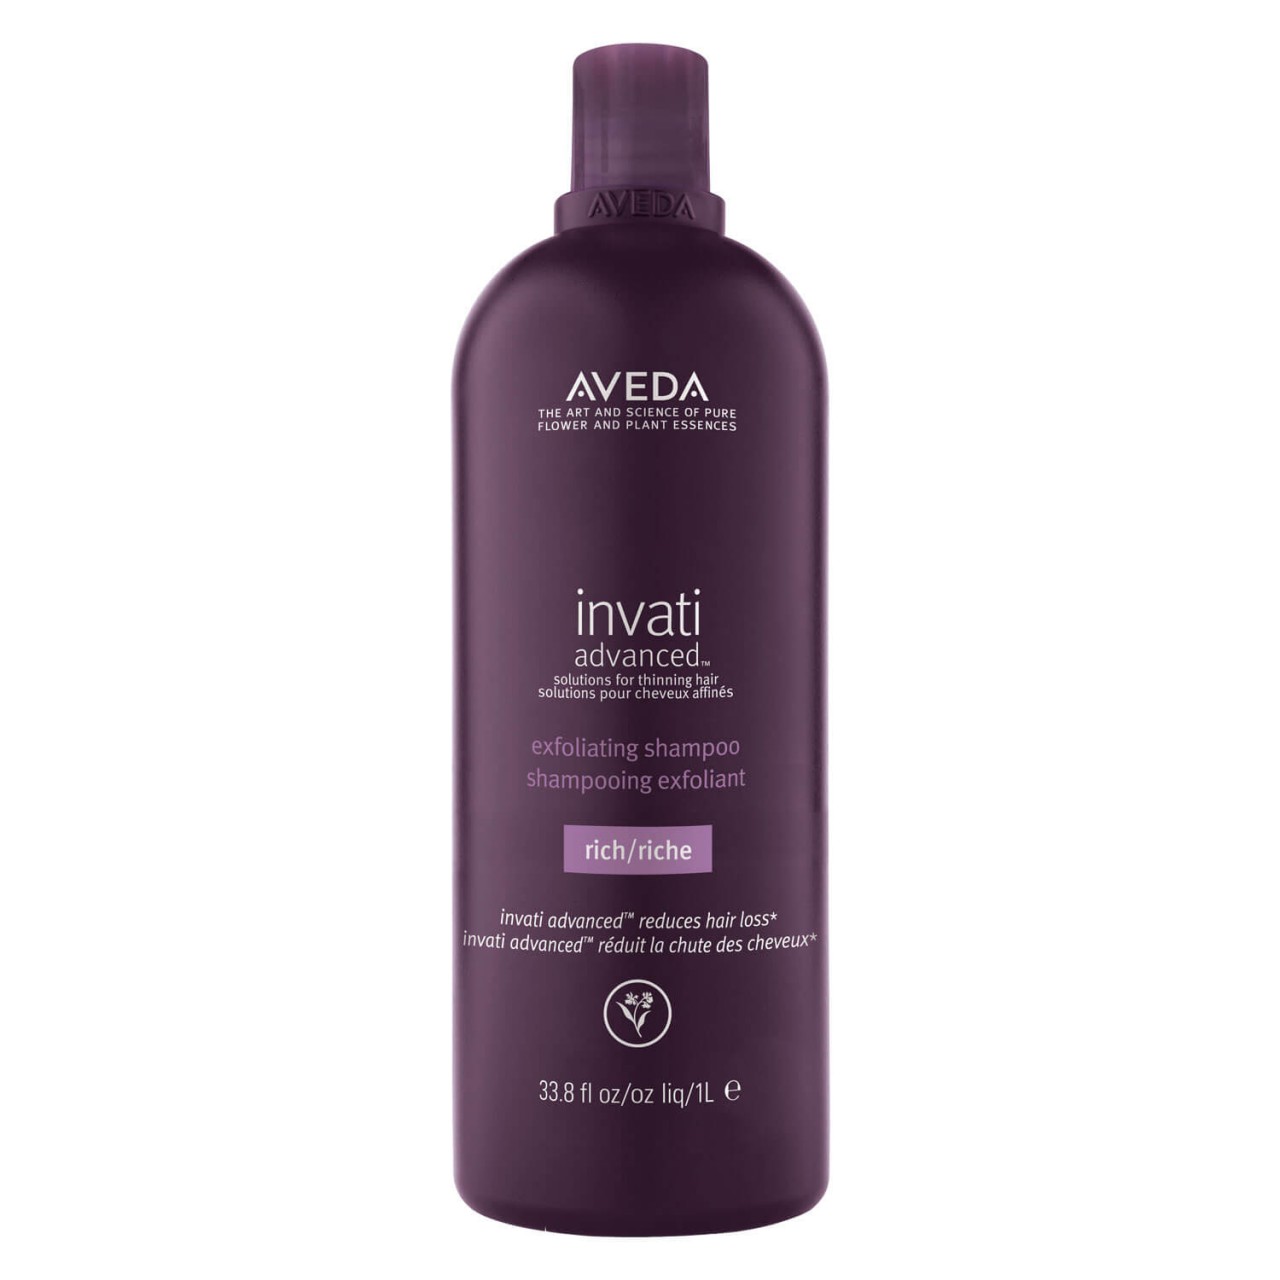 invati advanced - exfoliating shampoo rich von Aveda